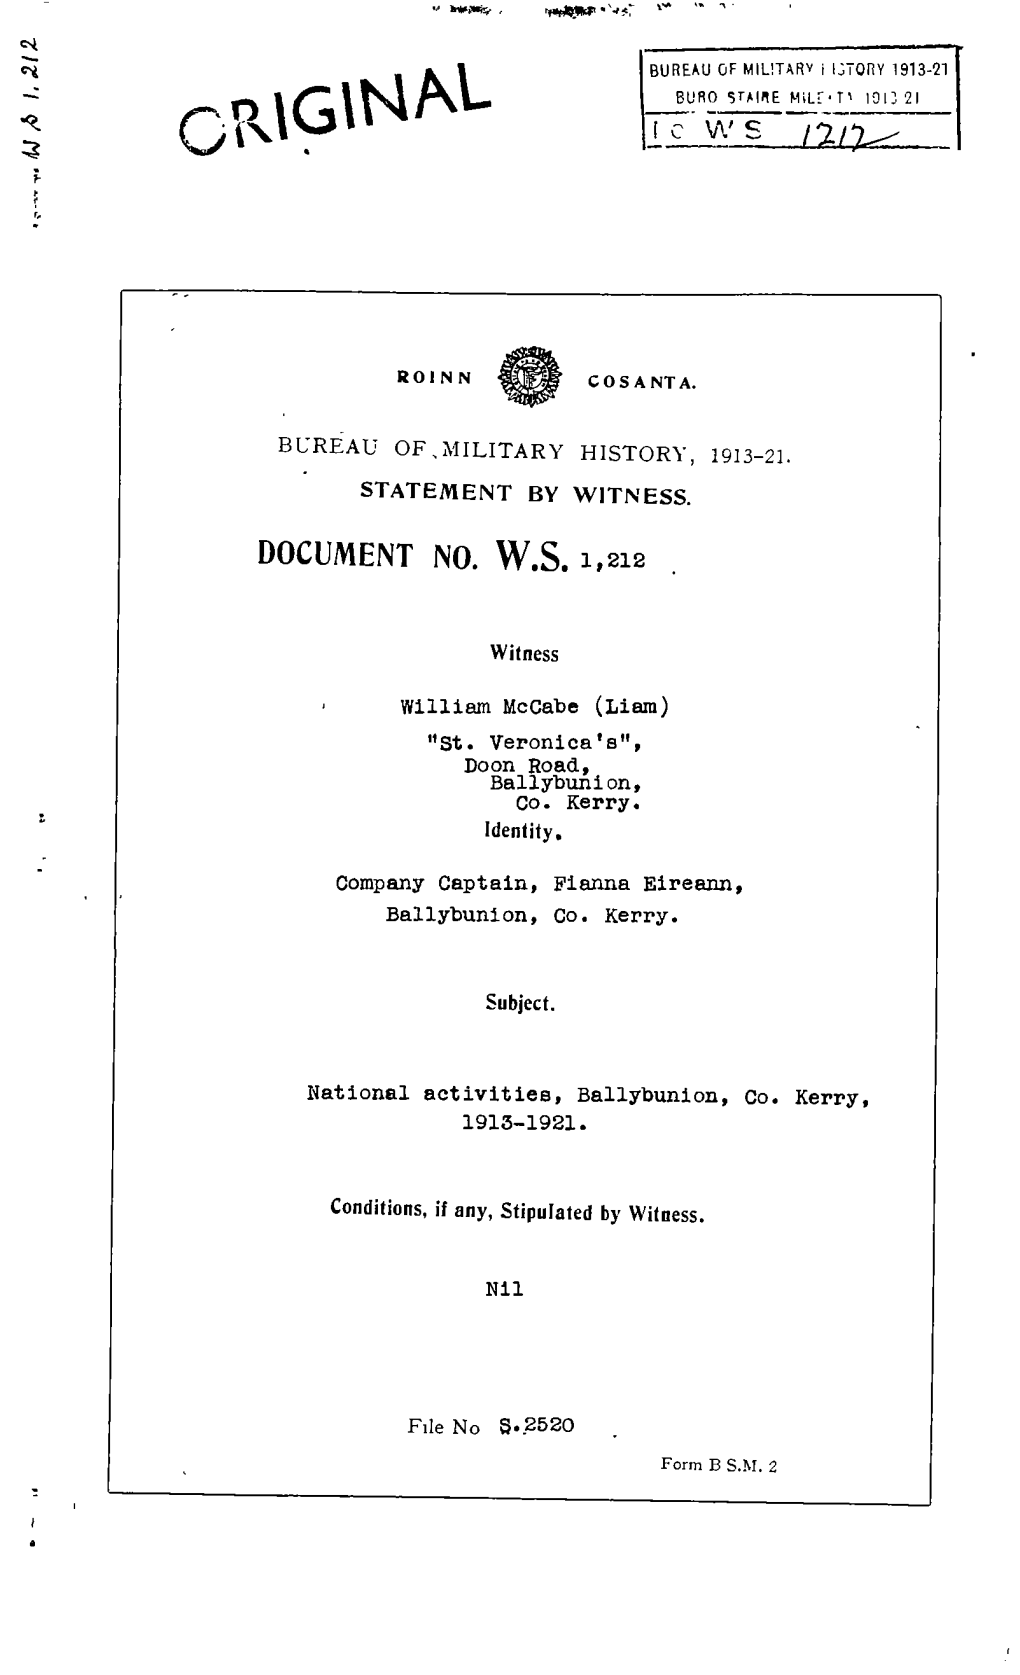 ROINN COSANTA. BUREAU of MILITARY HISTORY, 1913-21 STATEMENT by WITNESS. DOCUMENT NO. WS 1212 Witness William Mccabe